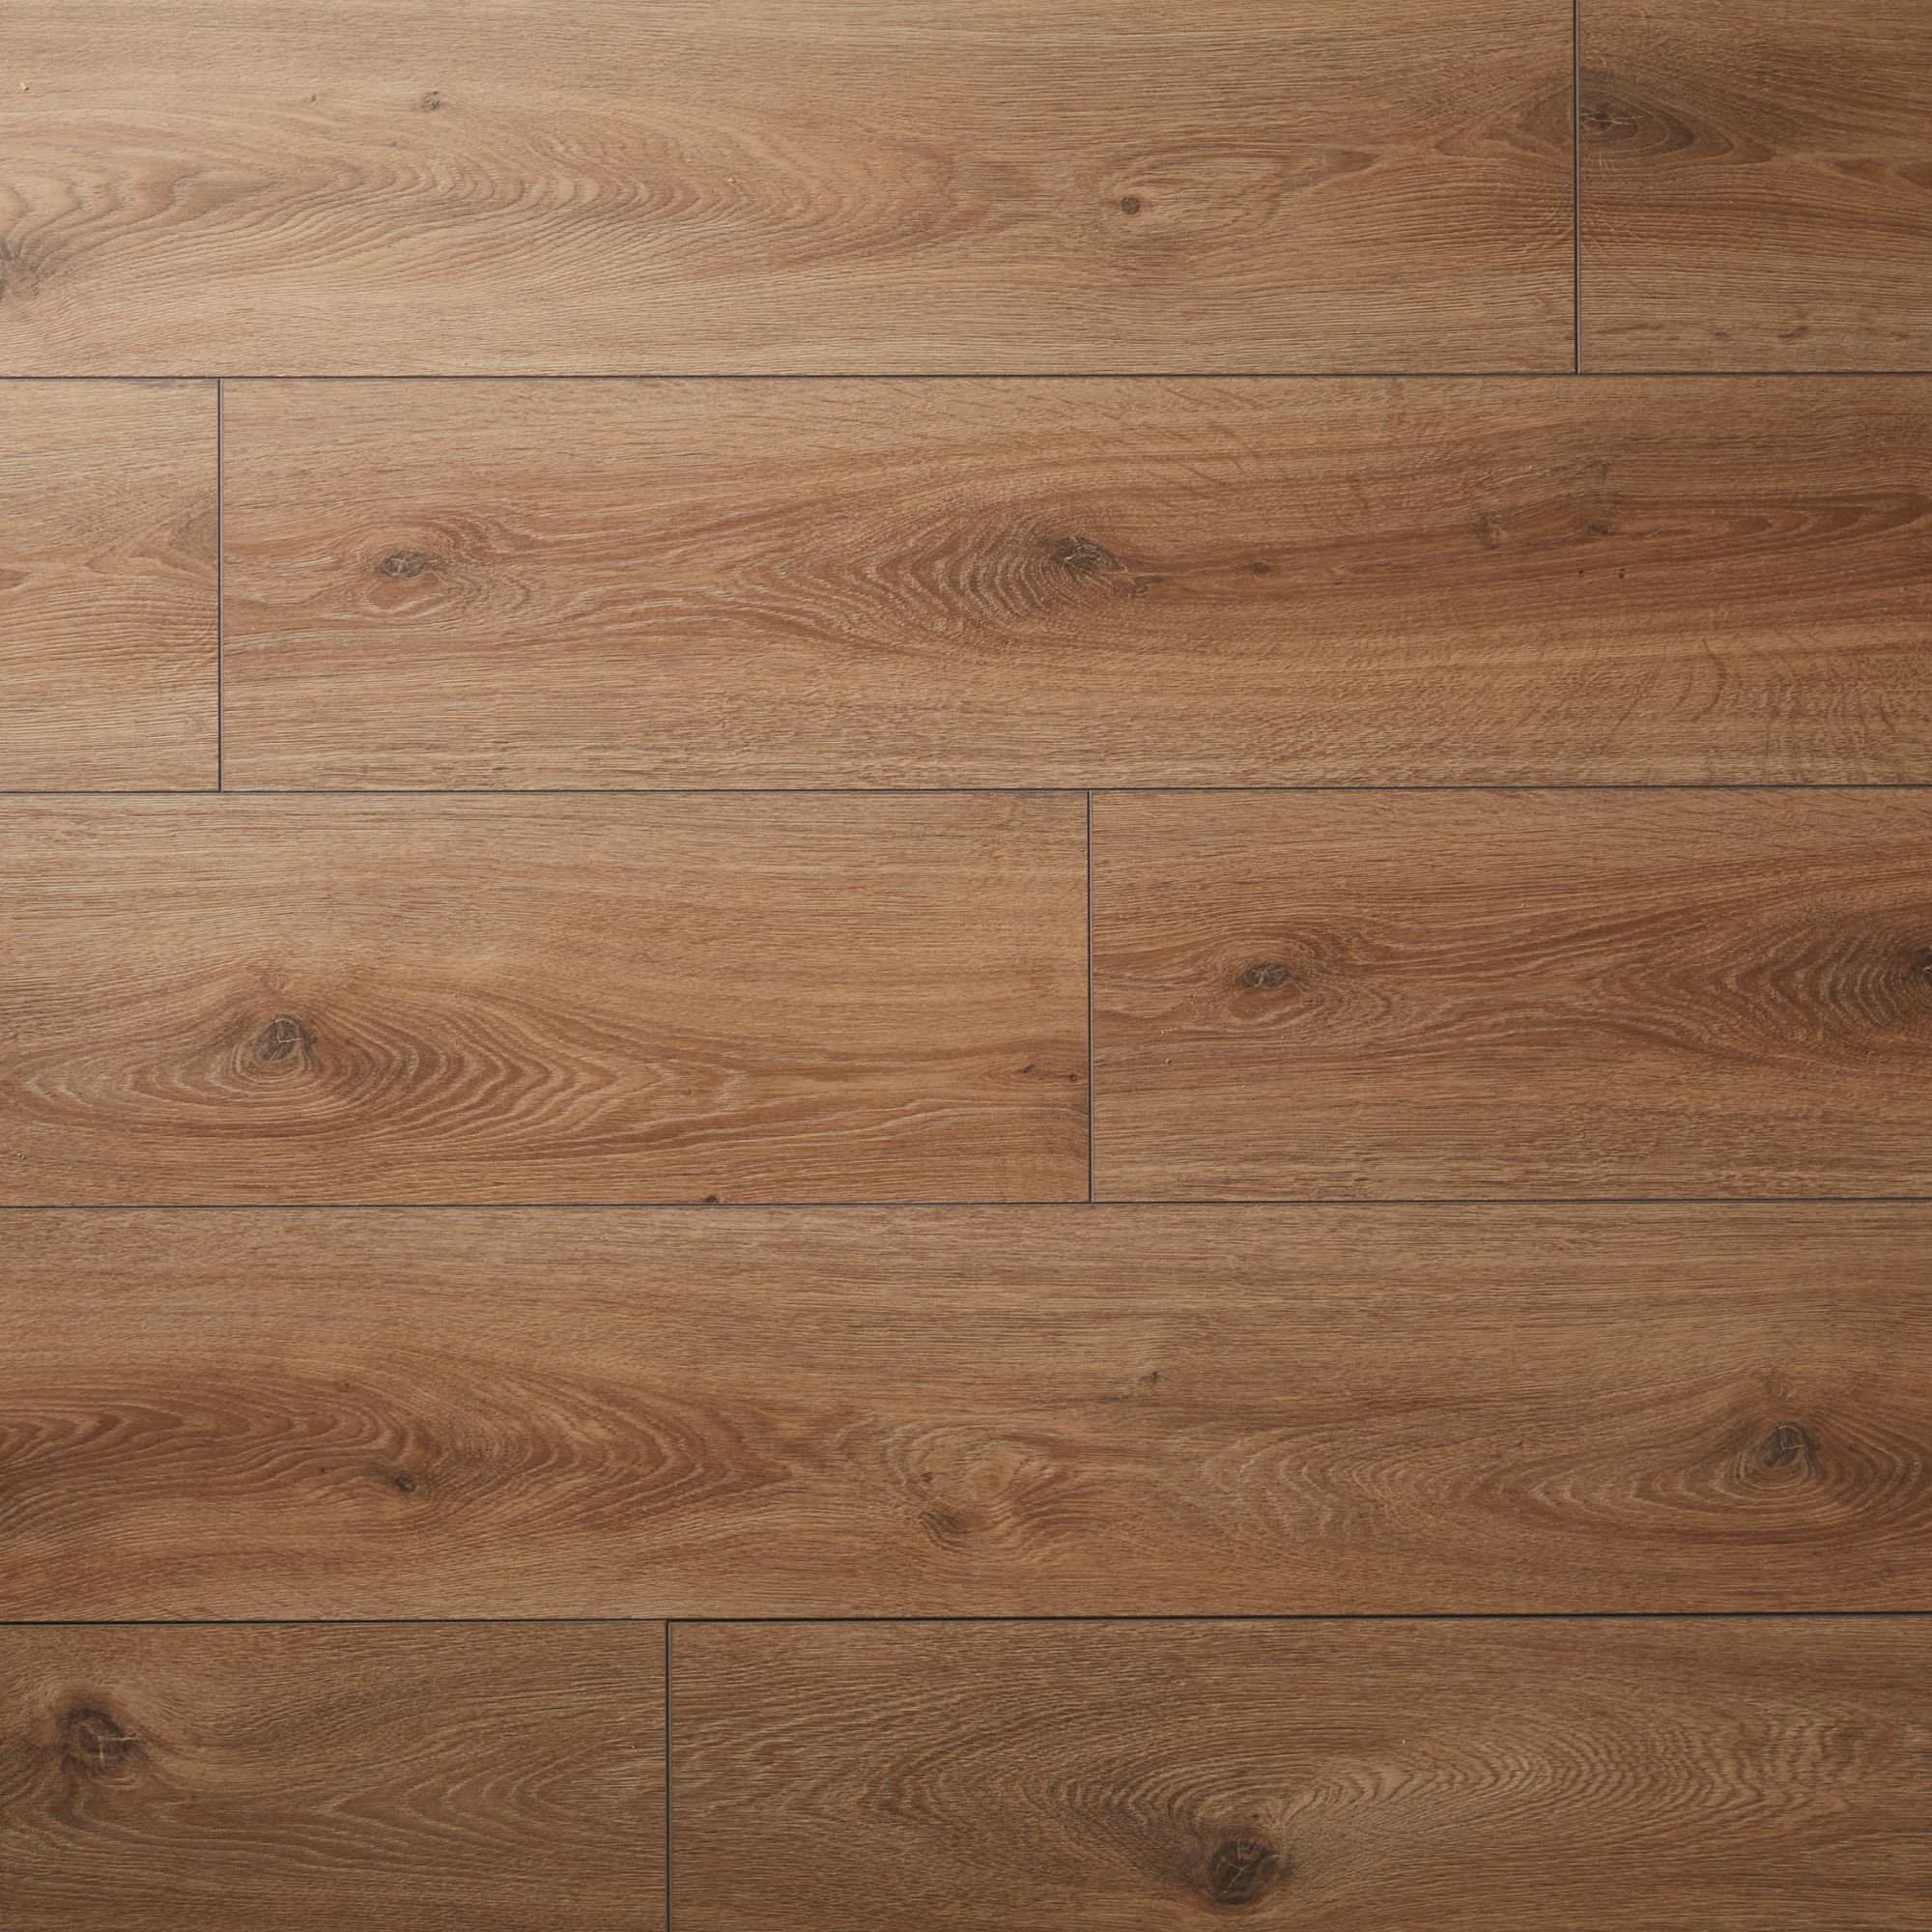 Neston Natural Gloss Oak effect Laminate Flooring Sample